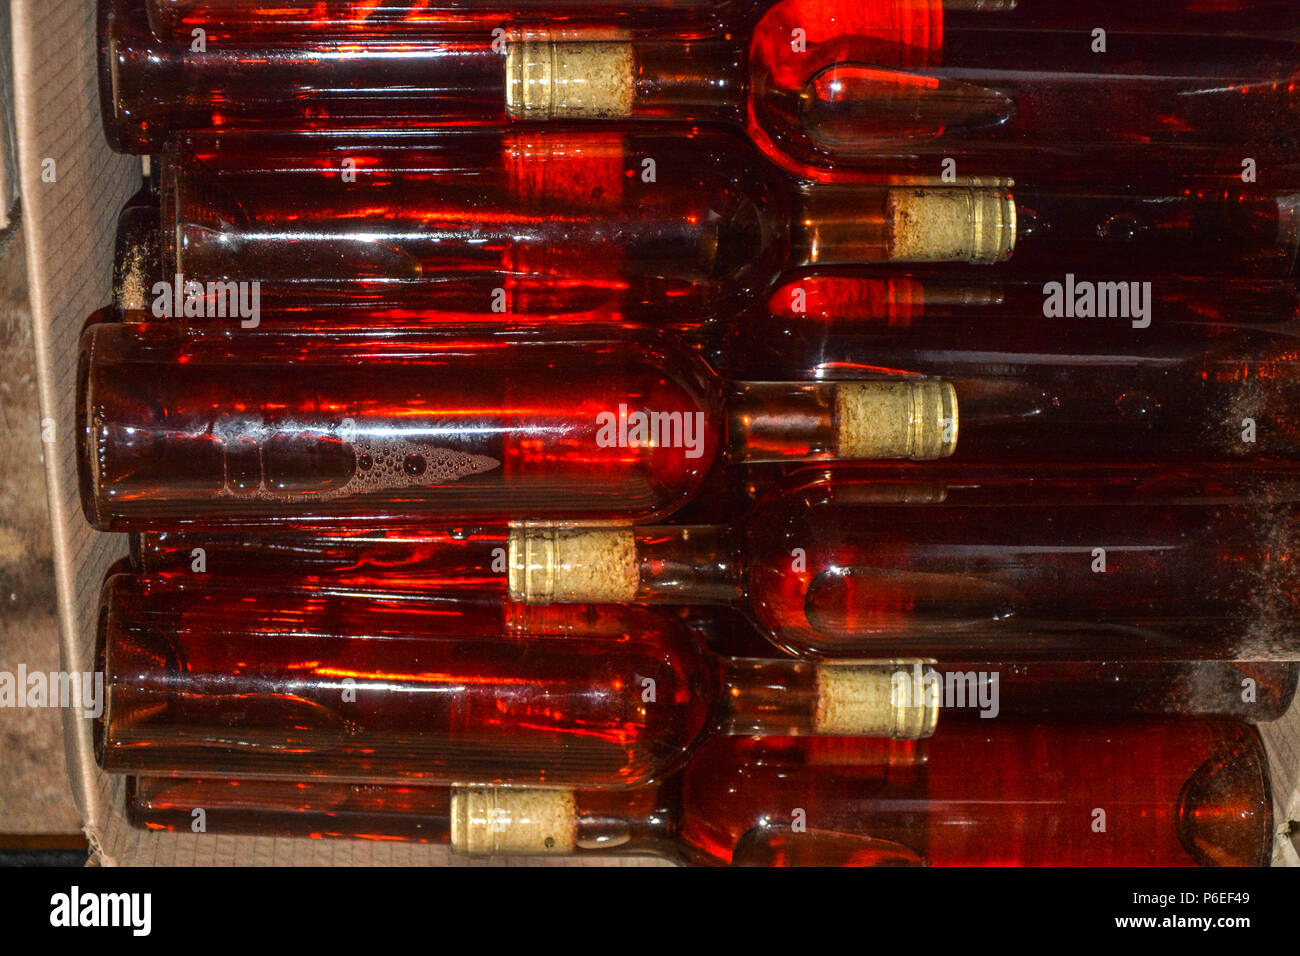 Bottles of domestic wine. Resting wine bottles stacked on iron racks in cellar. Stock Photo